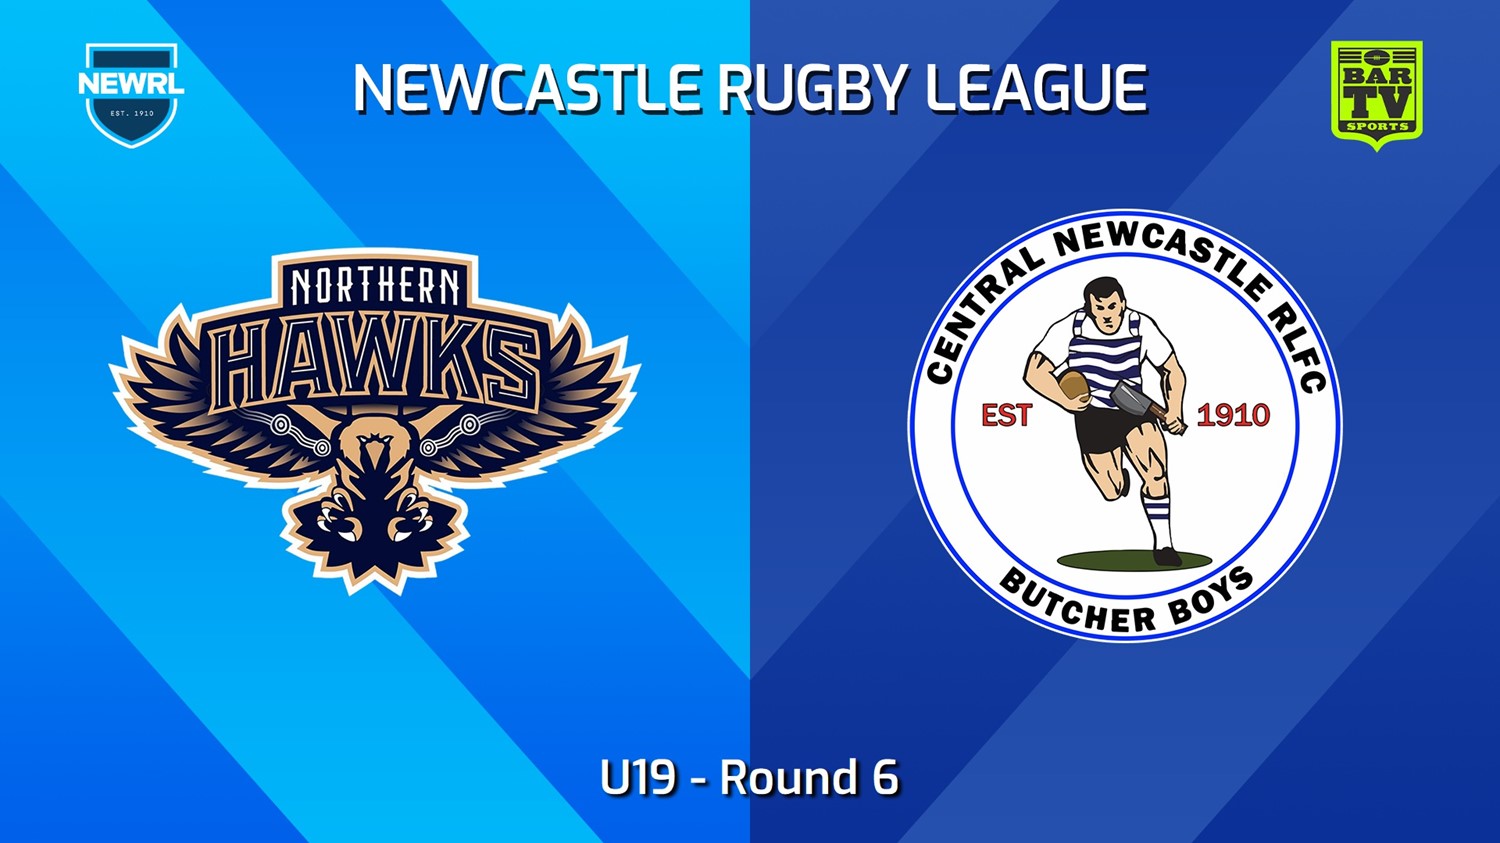 240525-video-Newcastle RL Round 6 - U19 - Northern Hawks v Central Newcastle Butcher Boys Slate Image